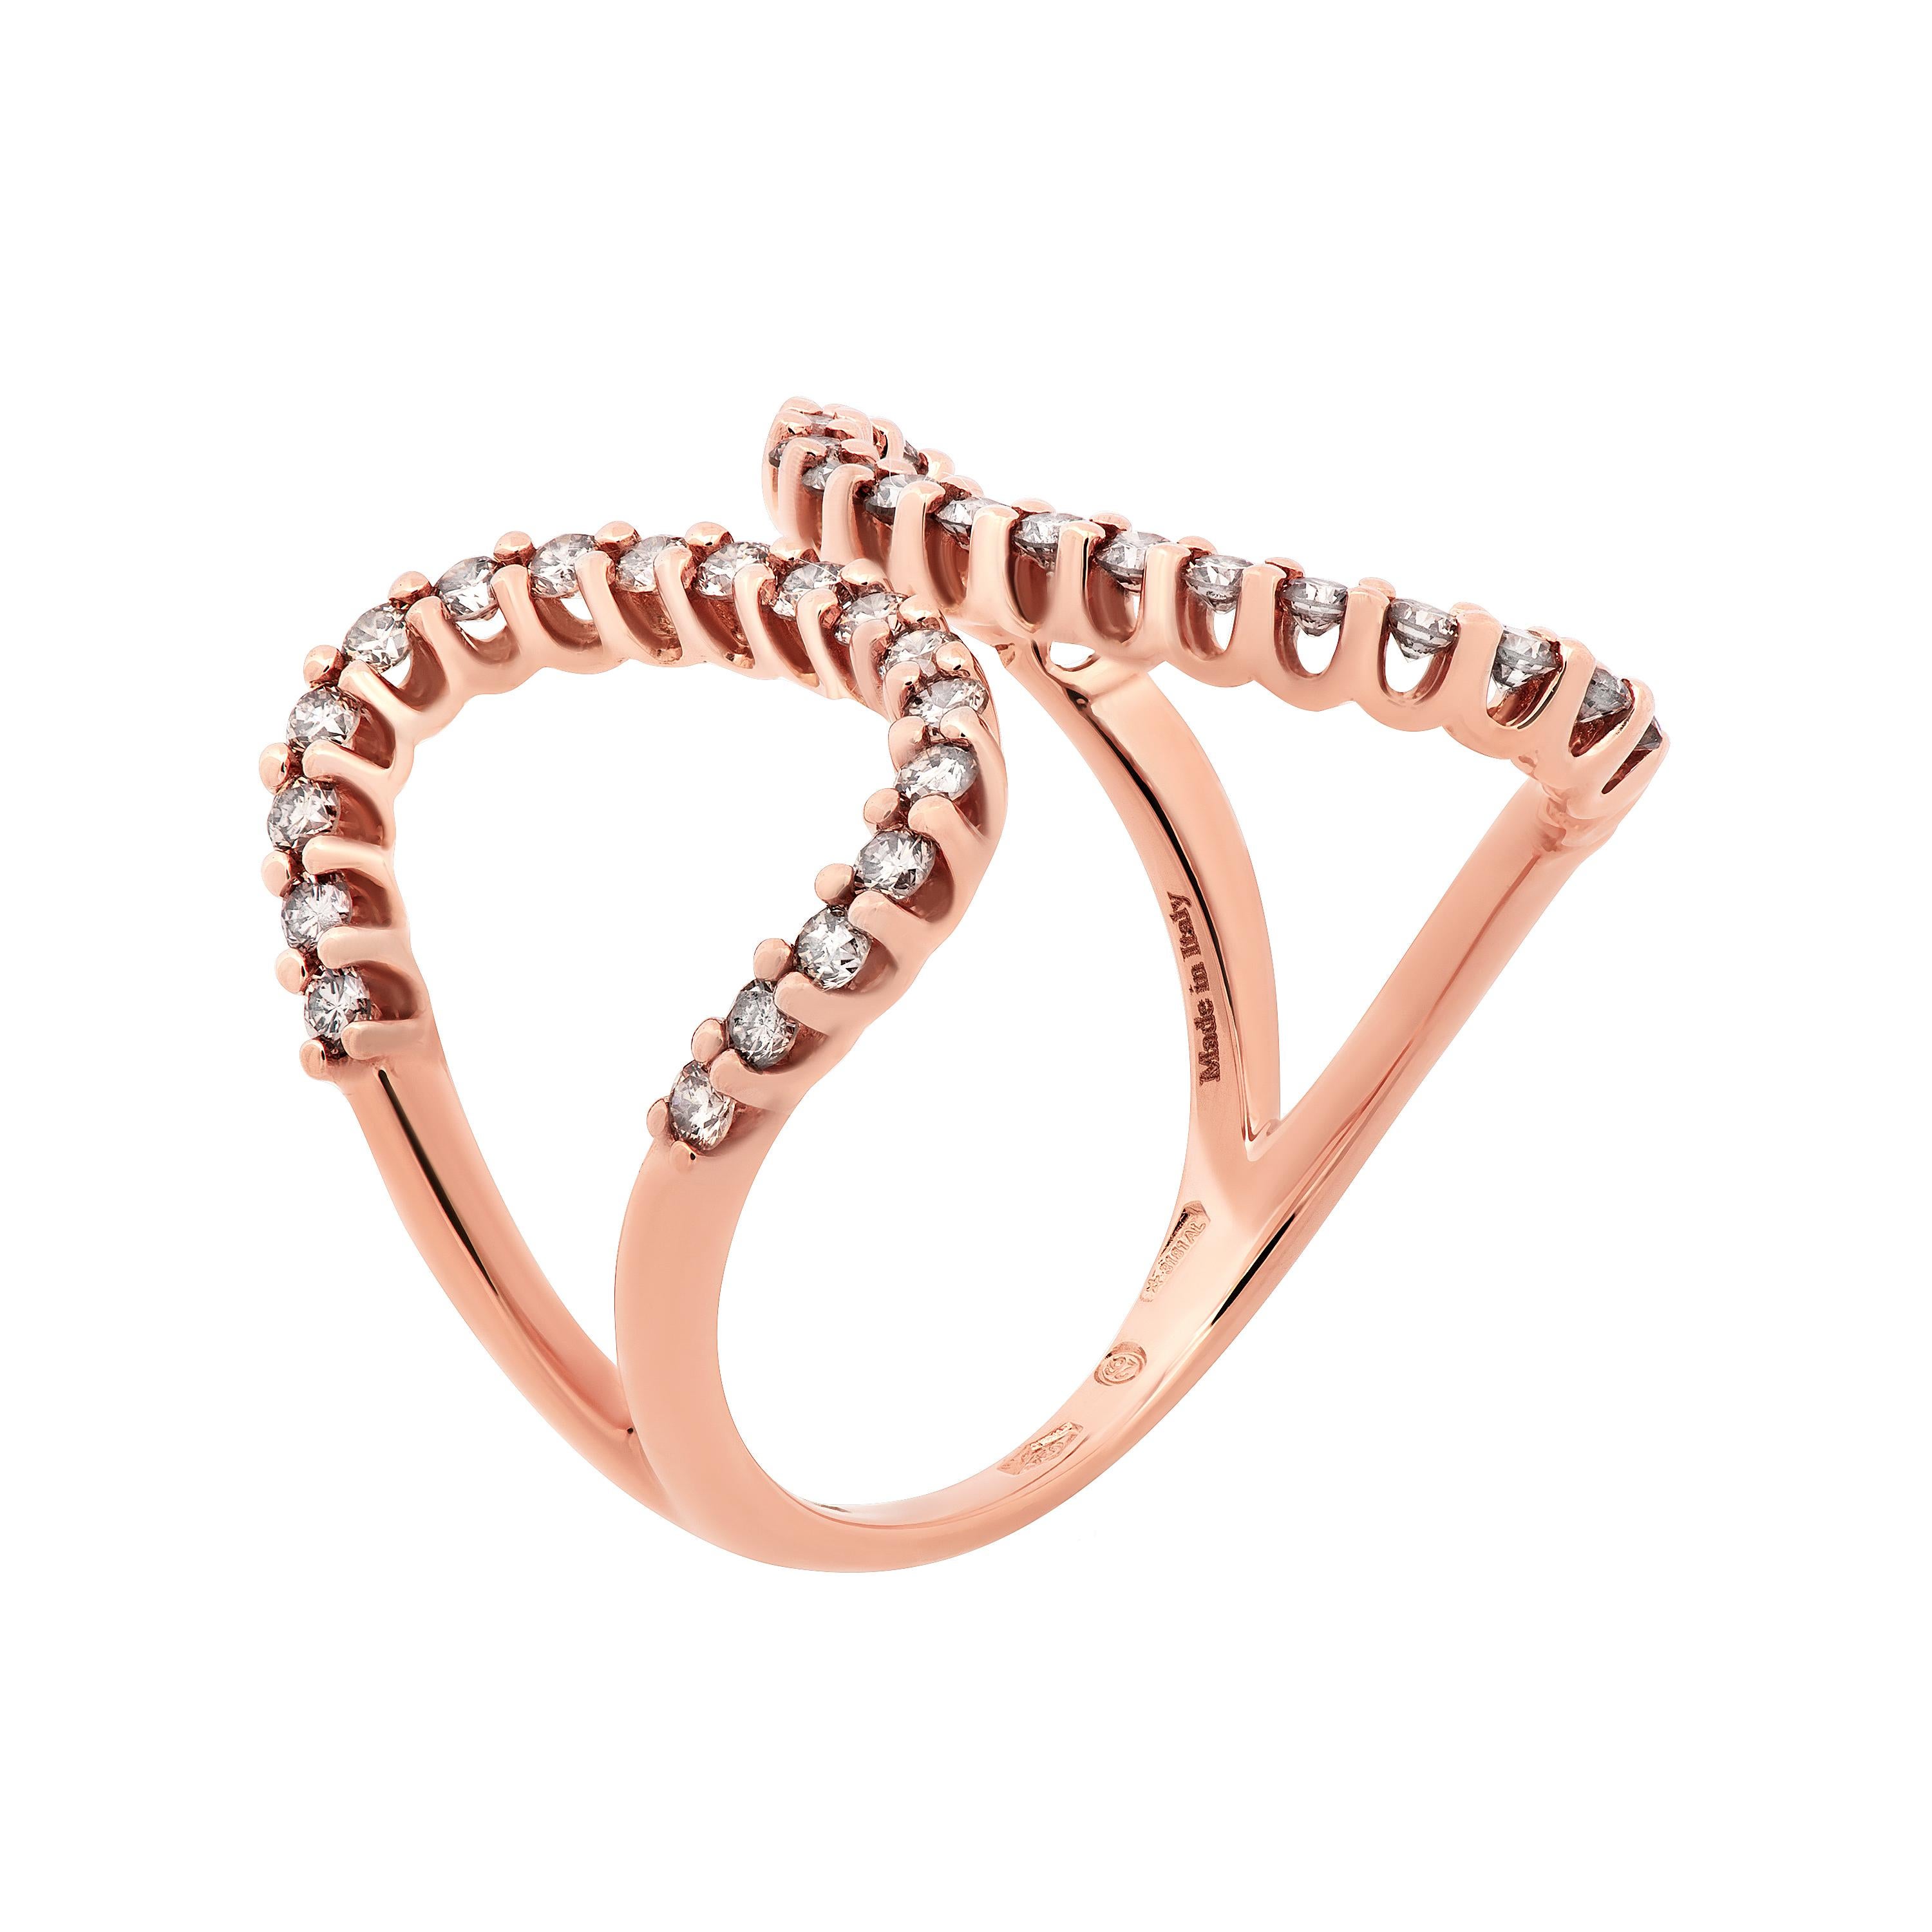 Contemporary SALVINI 18K Rose Gold, Diamond Wrap Ring sz 6 For Sale